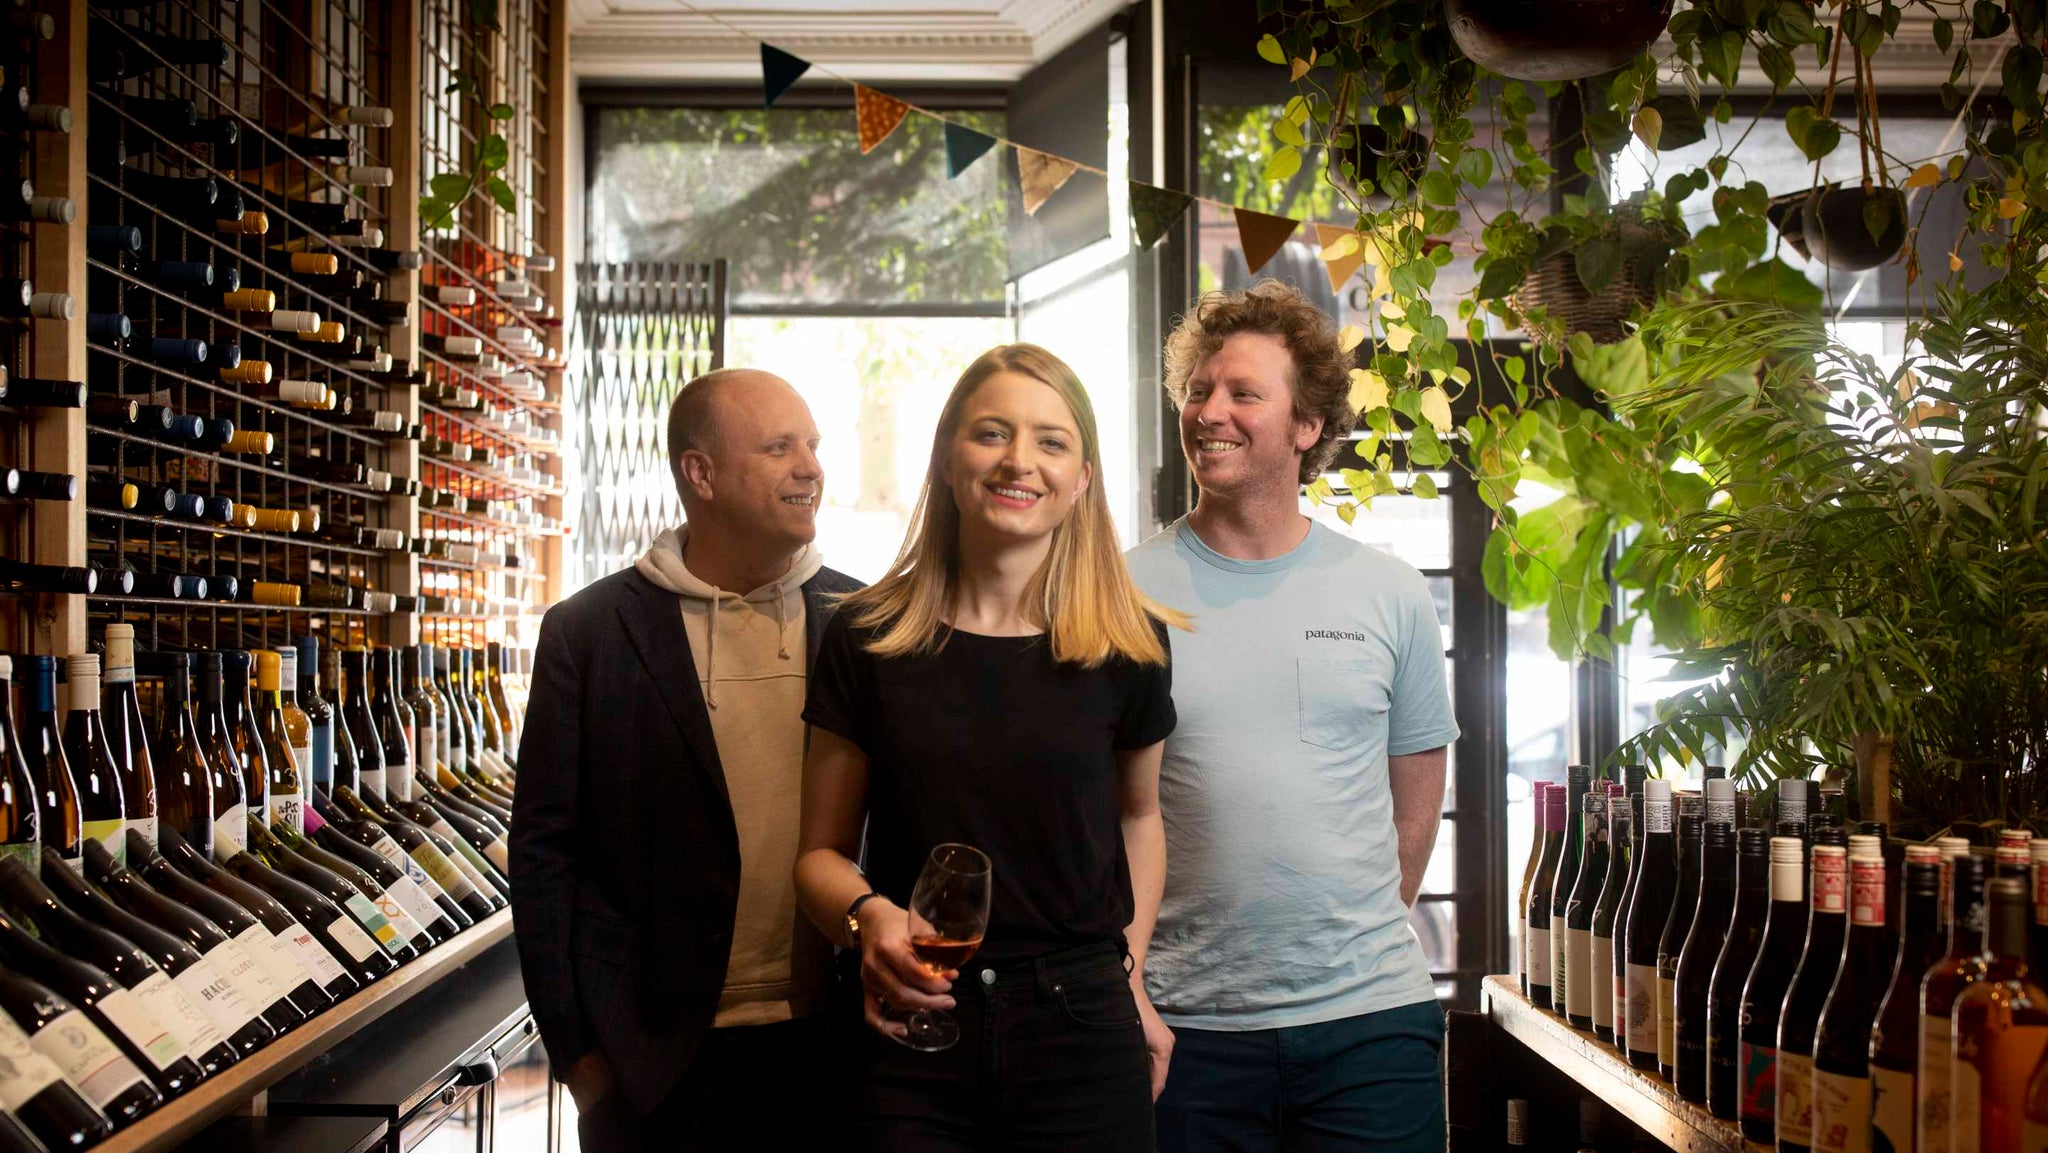 Image shows Hey Tomorrow partners Jesse Gerner, Sacha Imrie, Shane Barrett standing in Samuel Pepys Wine Merchant, Northcote, Melbourne, Australia